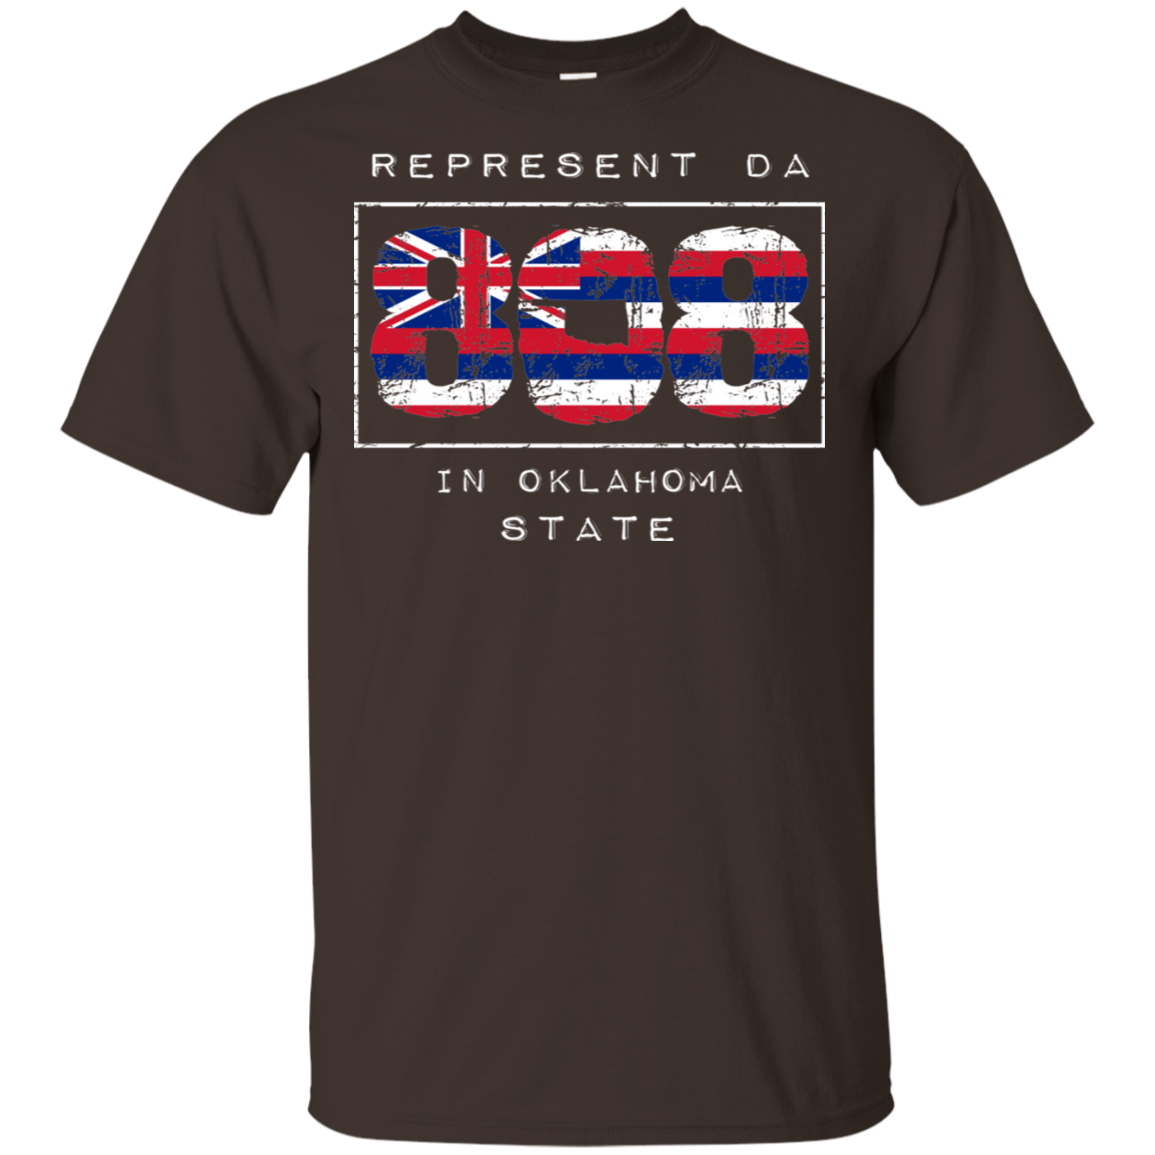 Rep Da 808 In Oklahoma State Ultra Cotton T-Shirt, T-Shirts, Hawaii Nei All Day